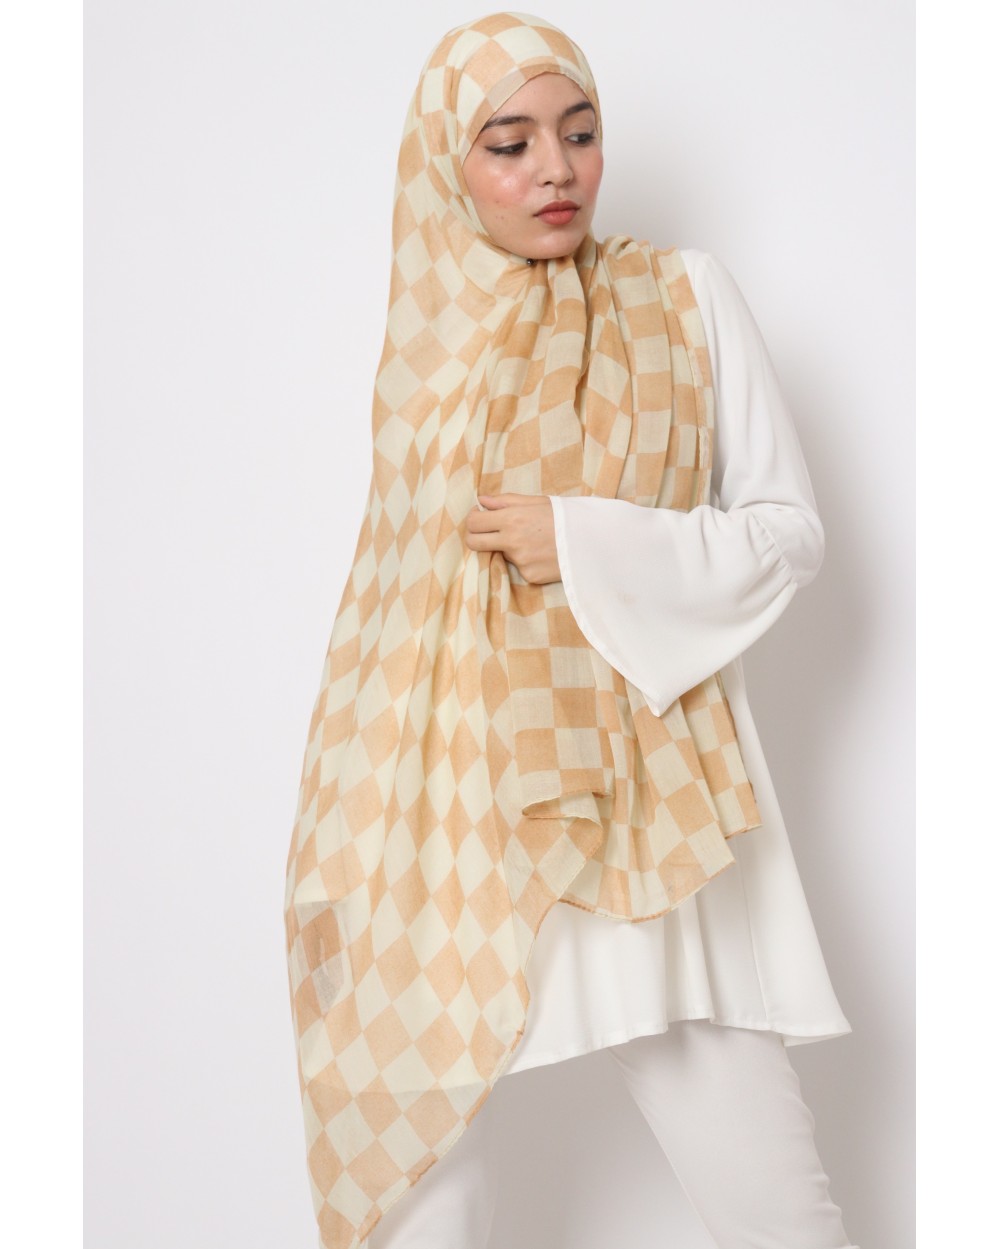 Hijab checkerboard